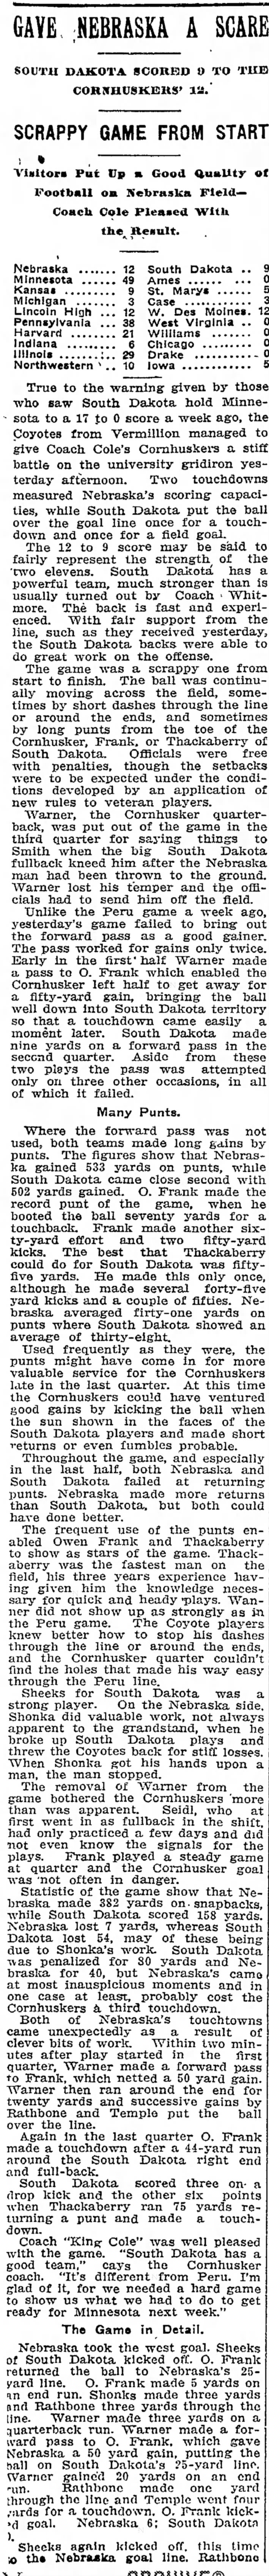 1910 Nebraska-South Dakota football, part 1